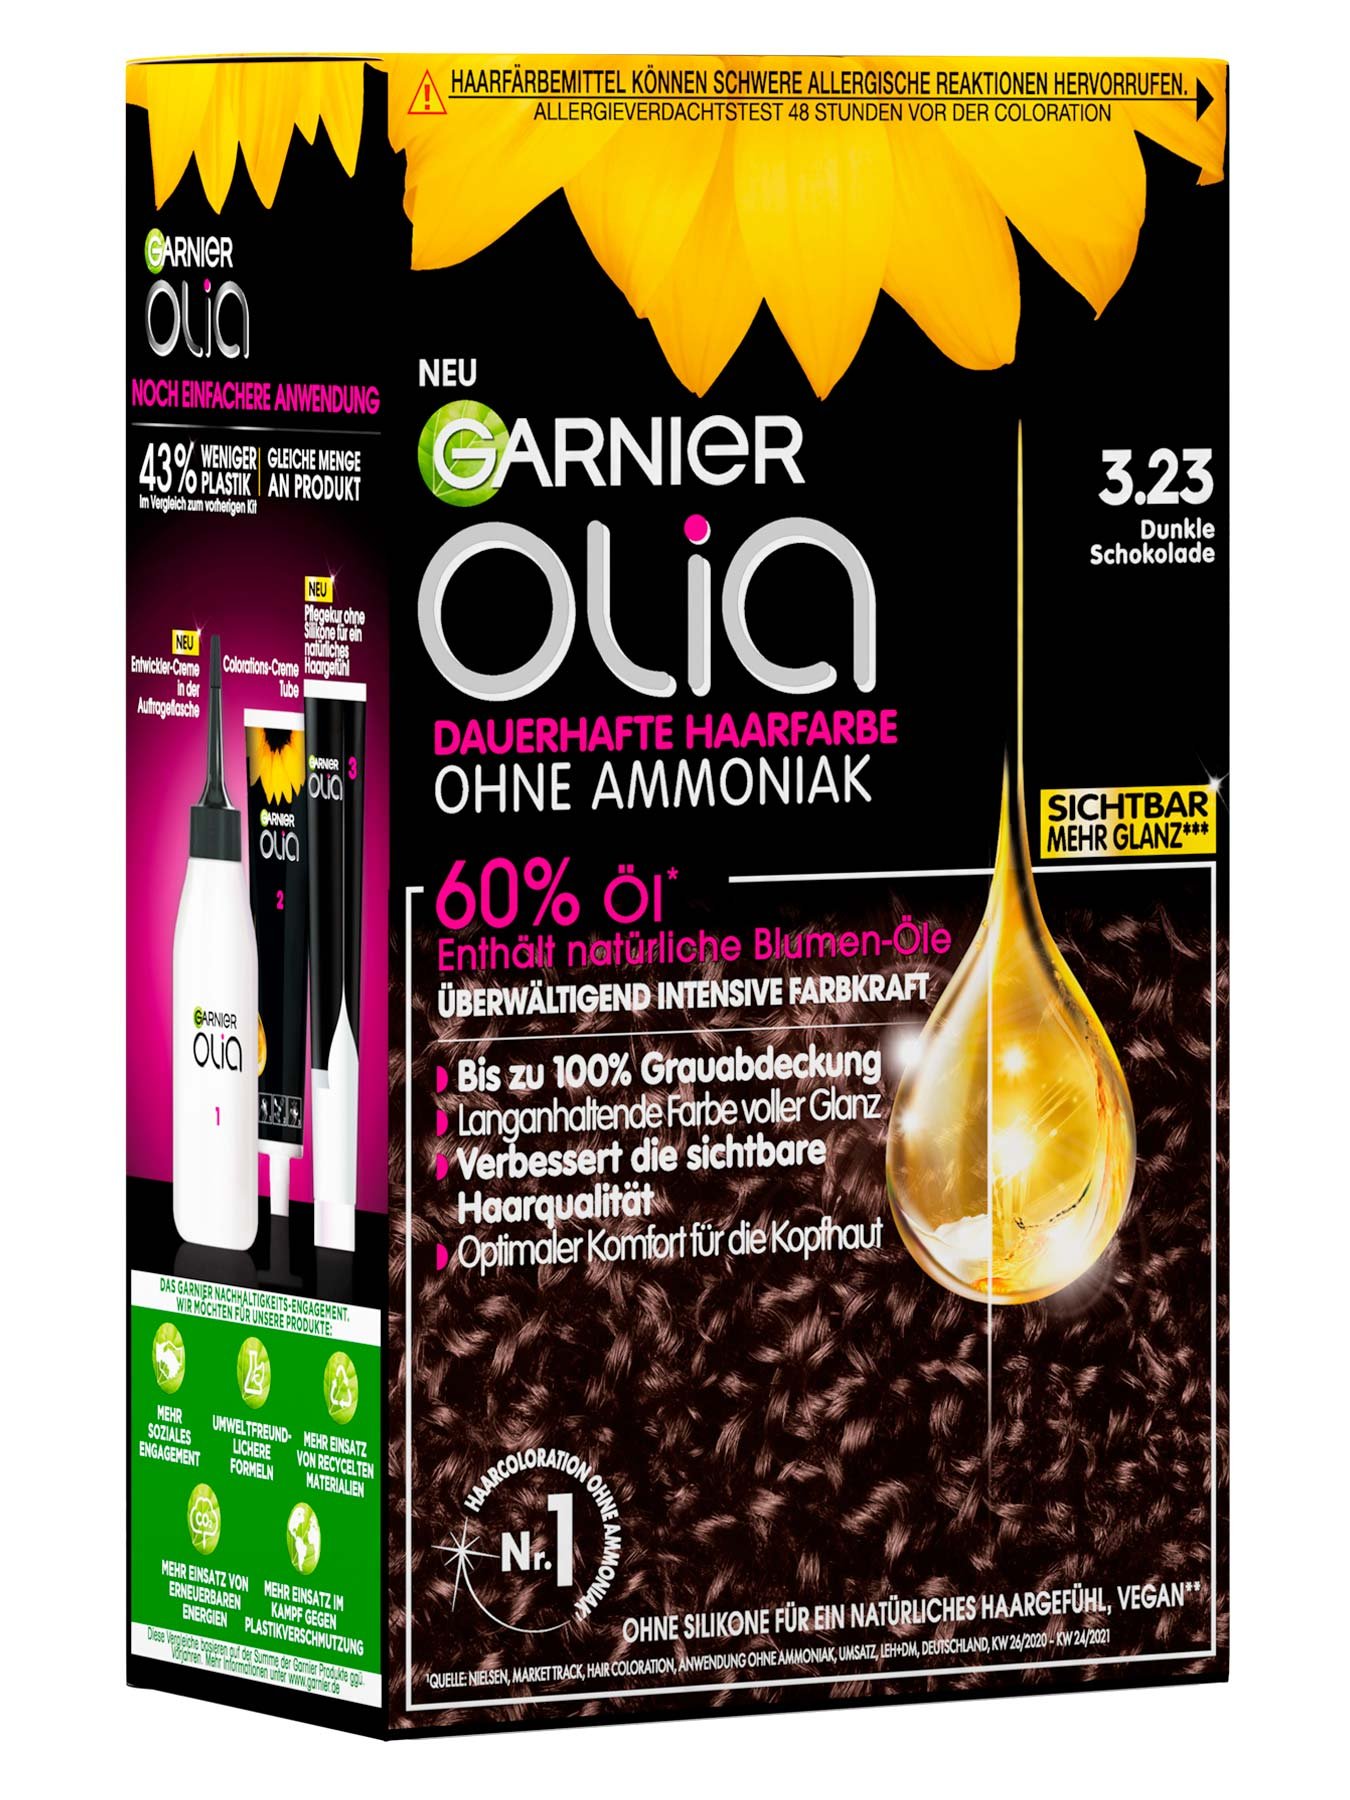 Garnier Olia Nr. 3.23 Dunkle Schokolade - Produktansicht links